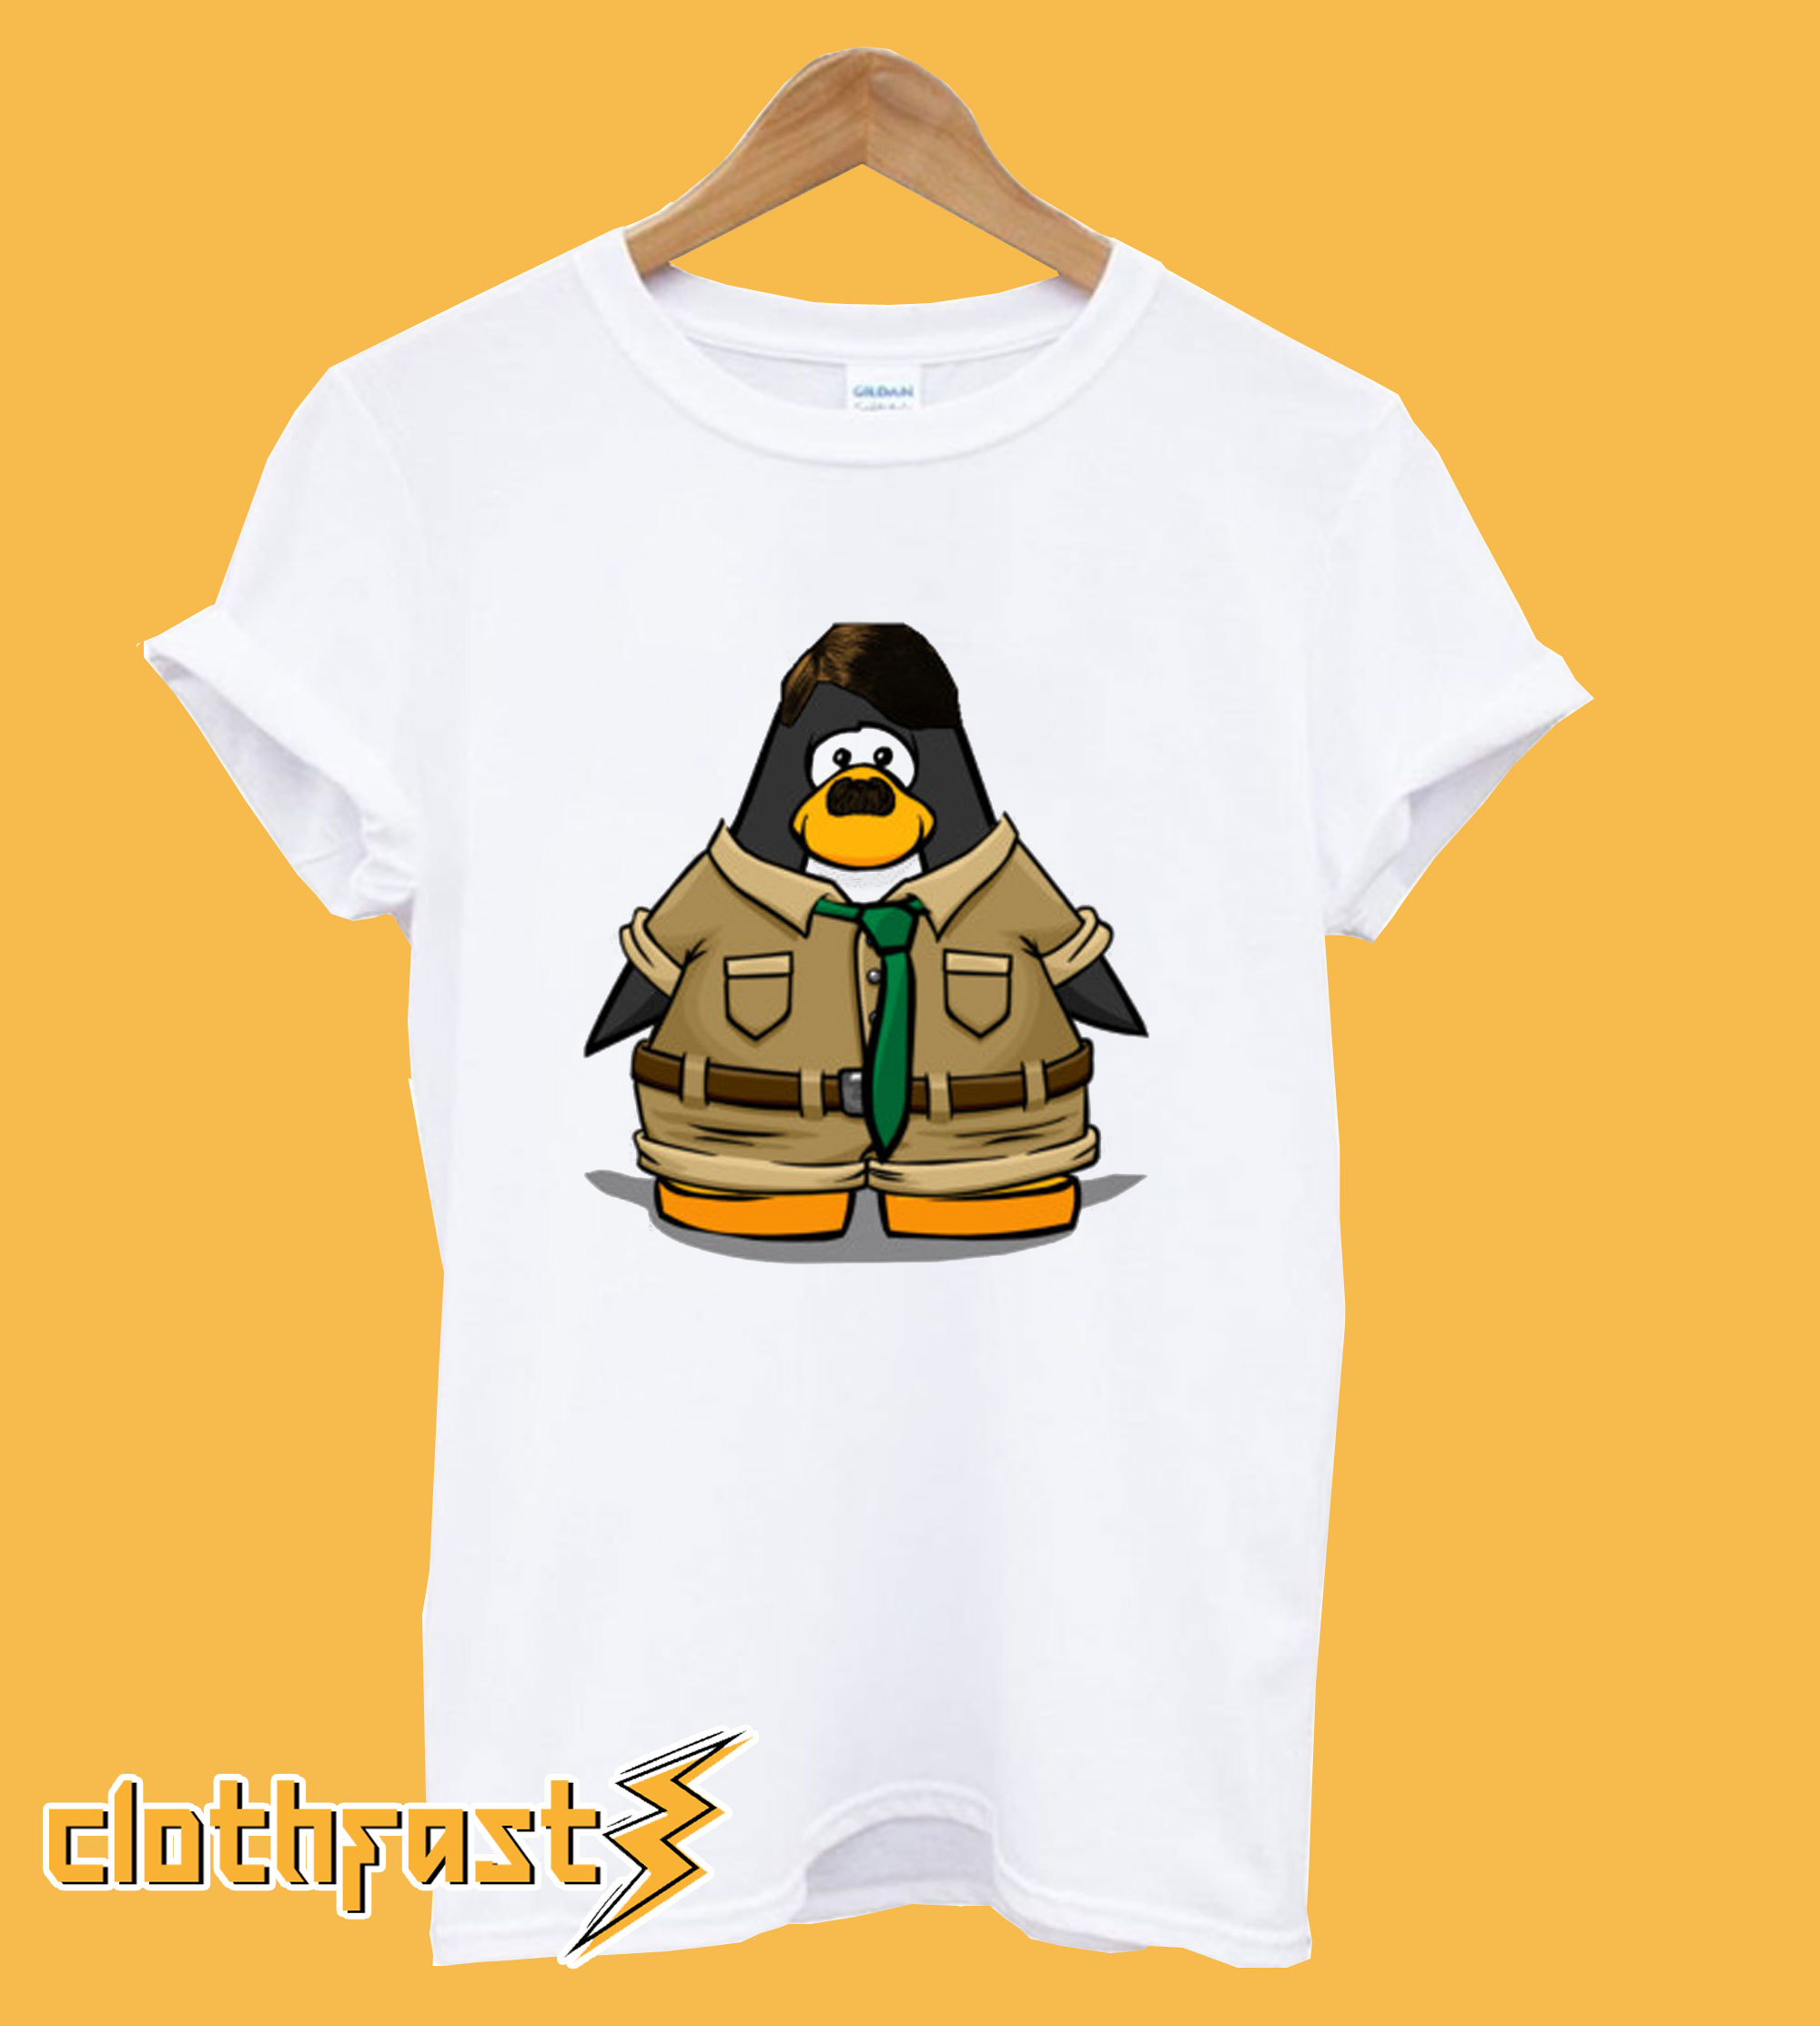 club penguin t shirt